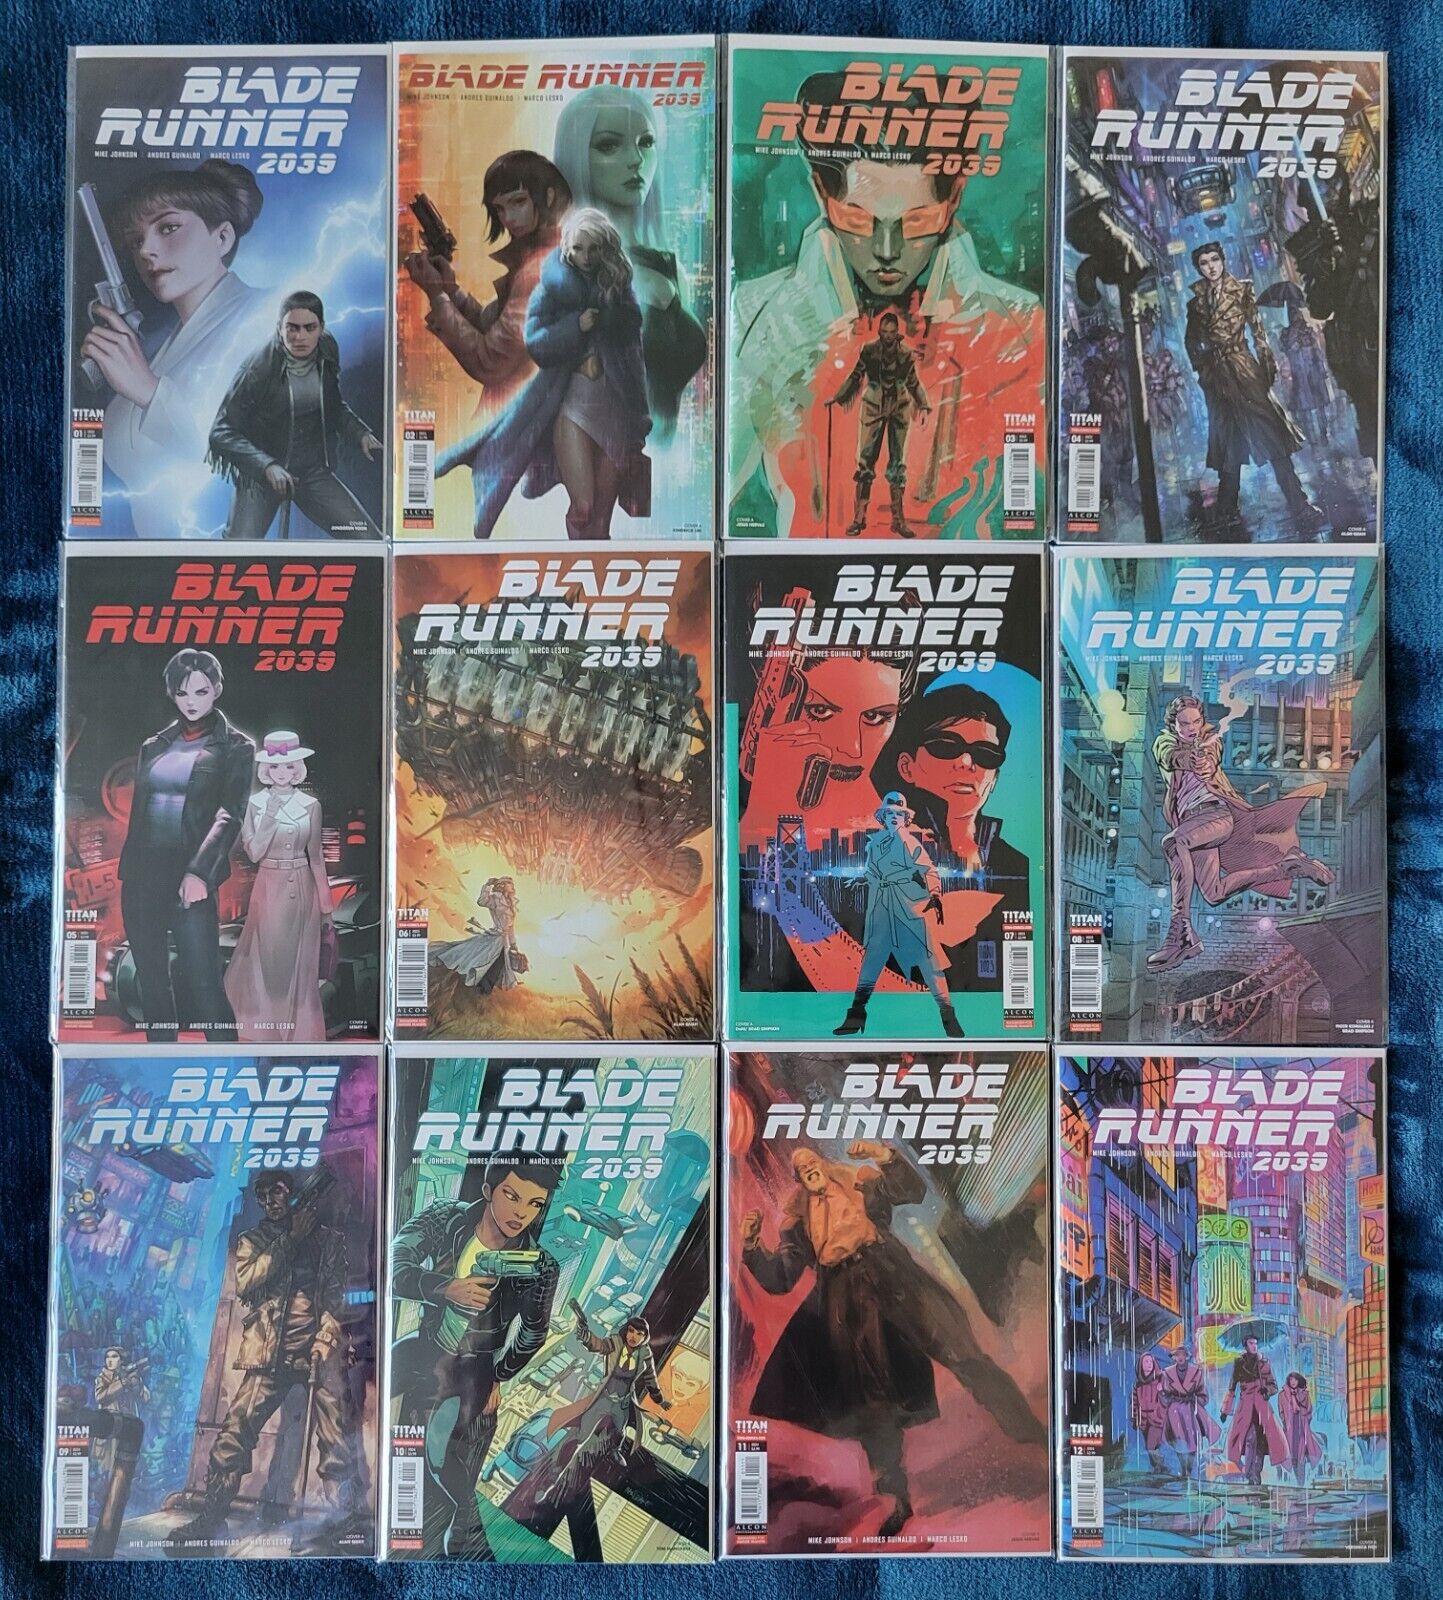 Blade Runner 2039 #1-12 (Complete Series, Standard Cover A, First Print Set)